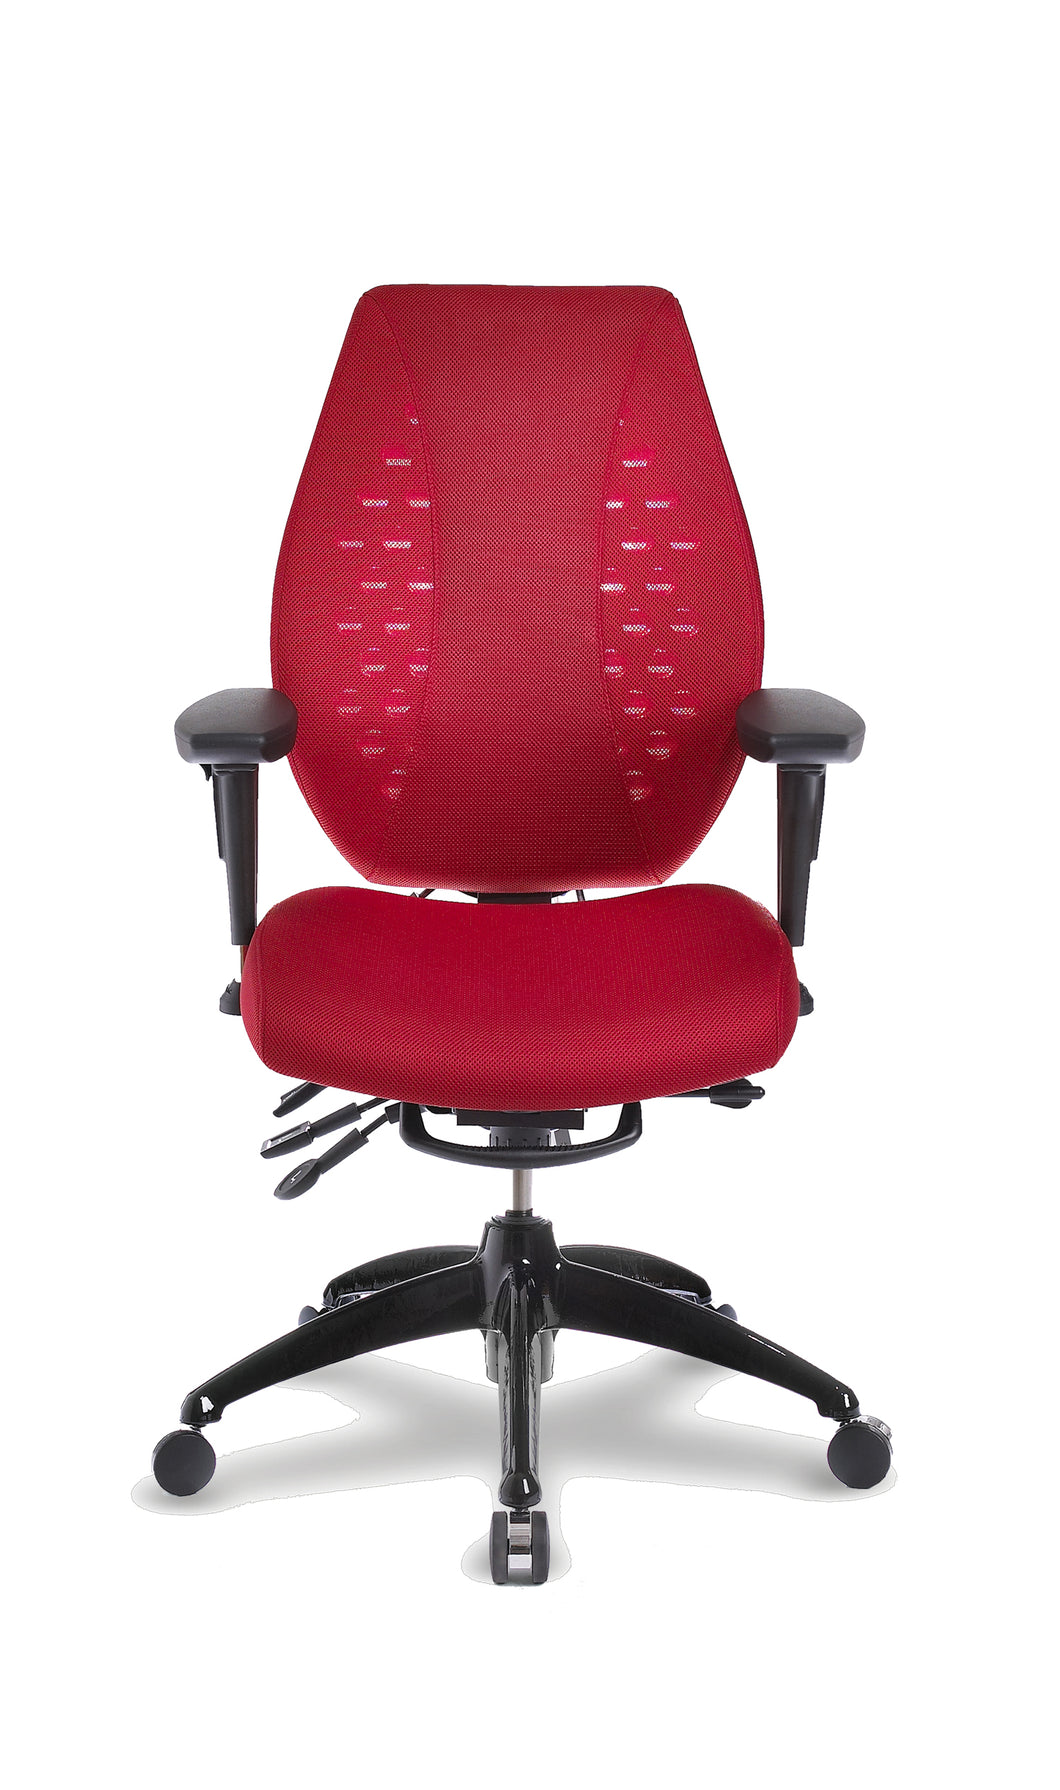 AirCentric ergonomic chair